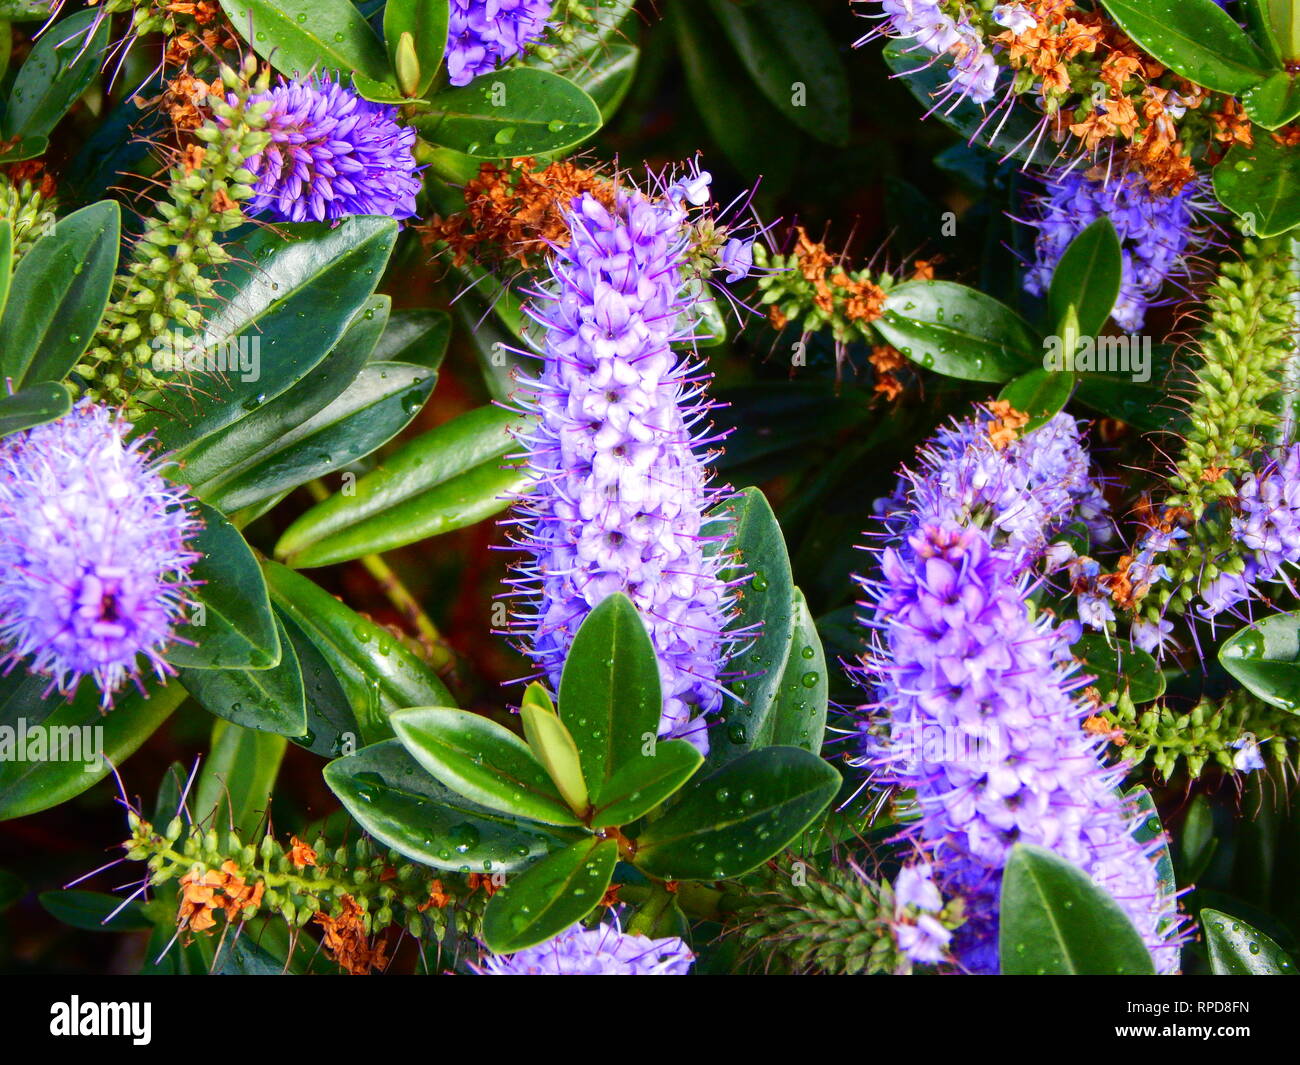 Purple flowers amongst green leaves Stock Photo